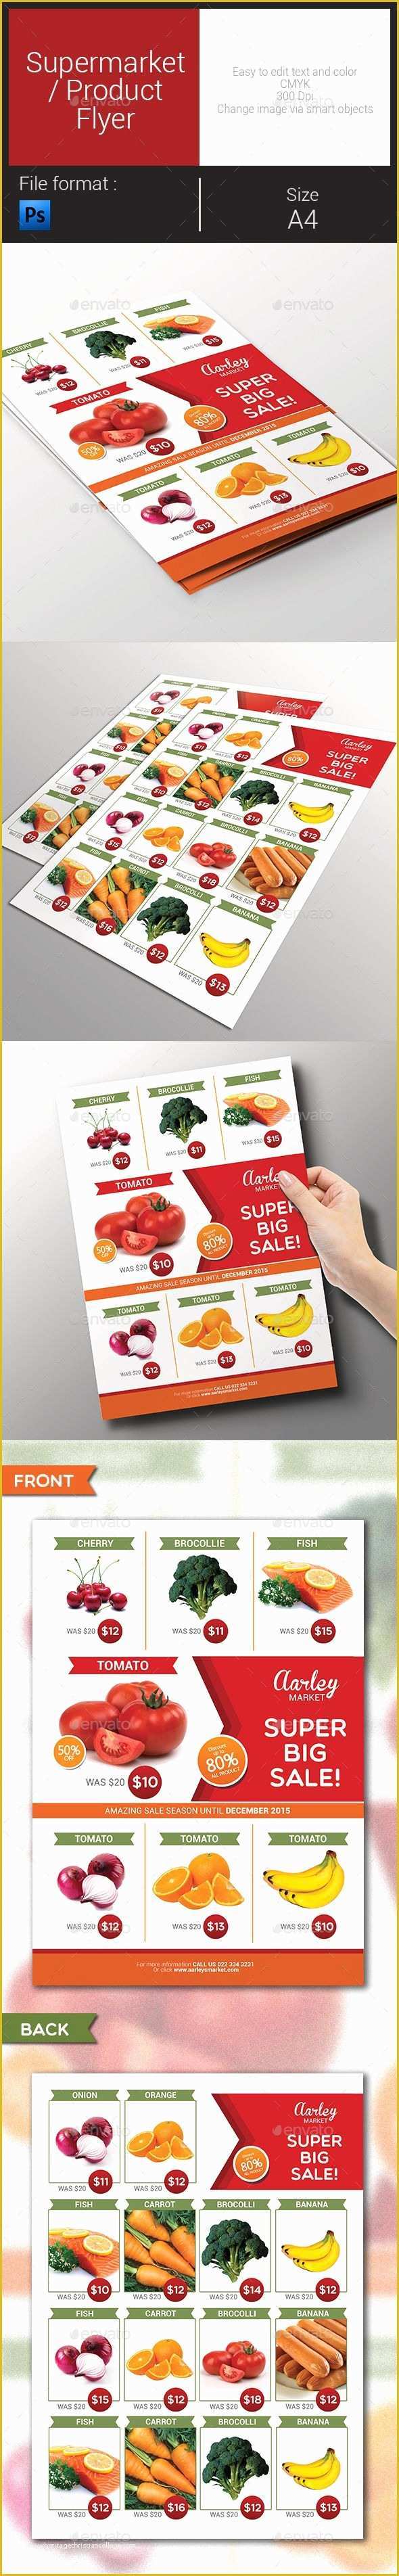 Supermarket Flyer Template Free Of Supermarket Product Flyer